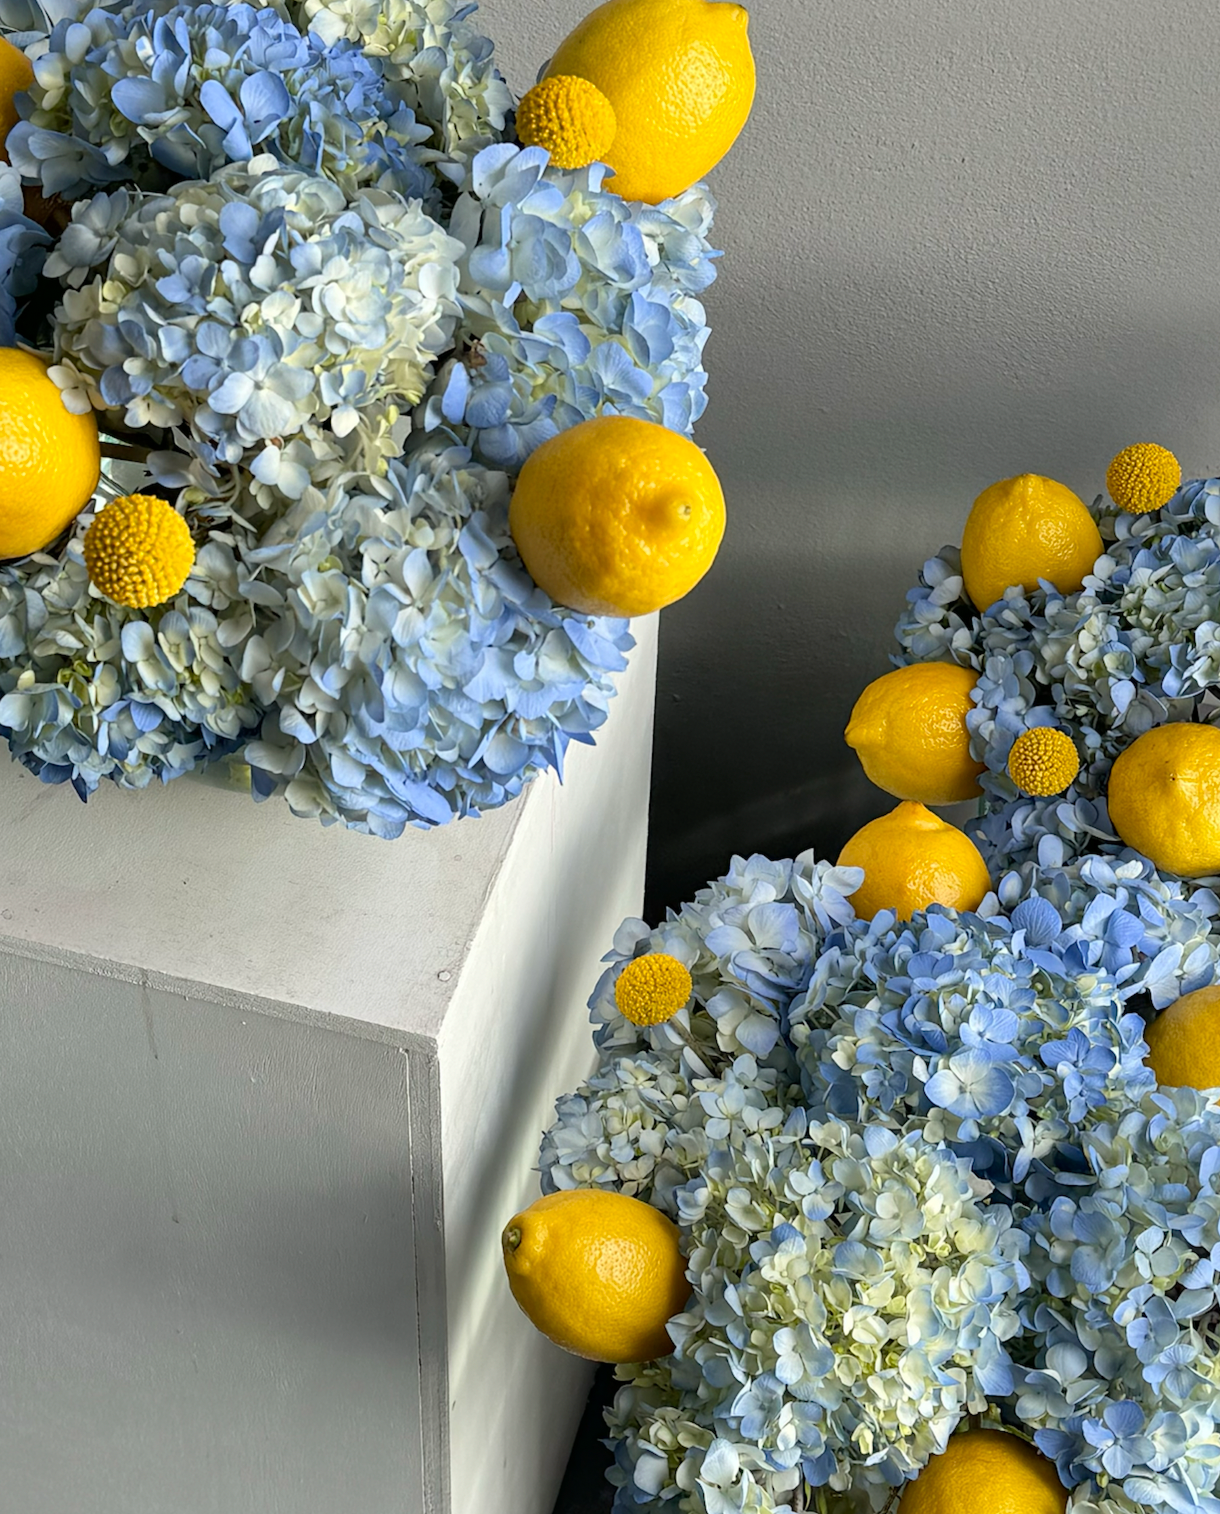 Floral arrangements “Lemon tree” - hydrangeas, lemons